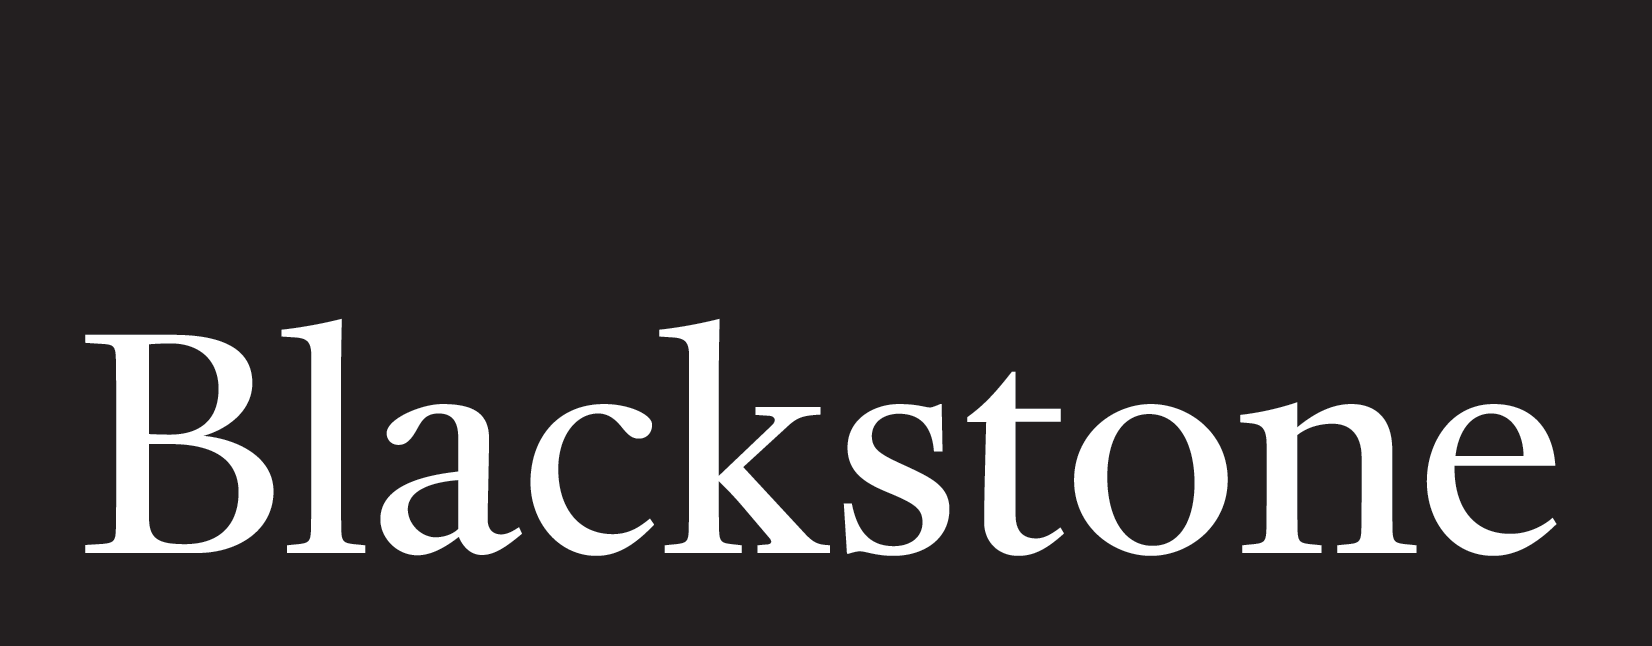 Blackstone-PRESS-QUALITY-6312